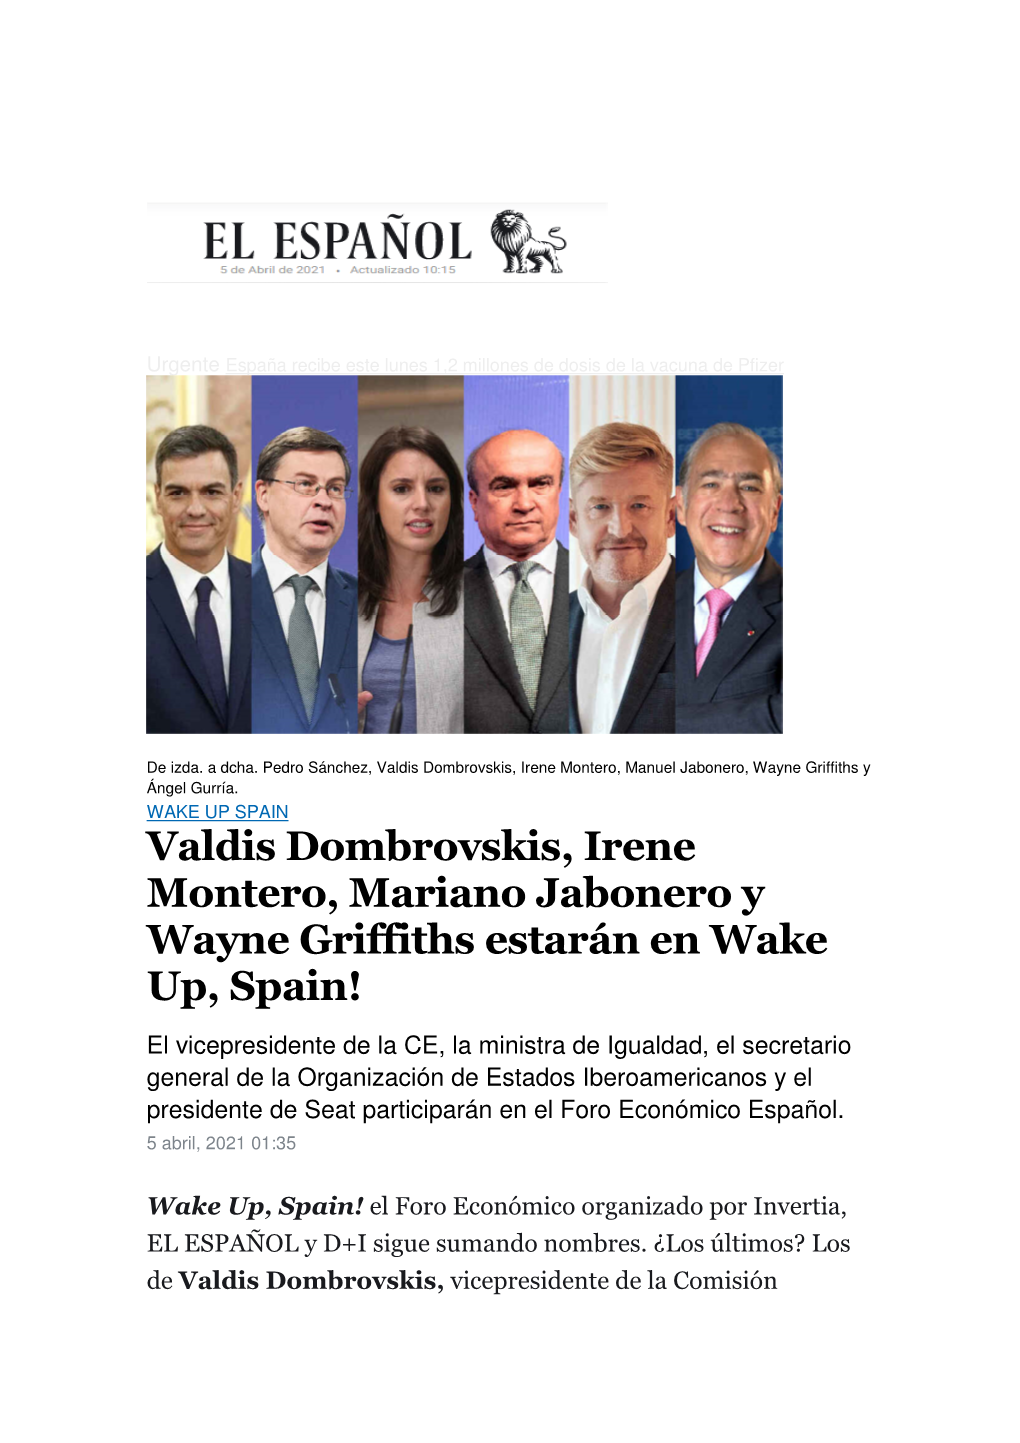 Valdis Dombrovskis, Irene Montero, Mariano Jabonero Y Wayne Griffiths Estarán En Wake Up, Spain!